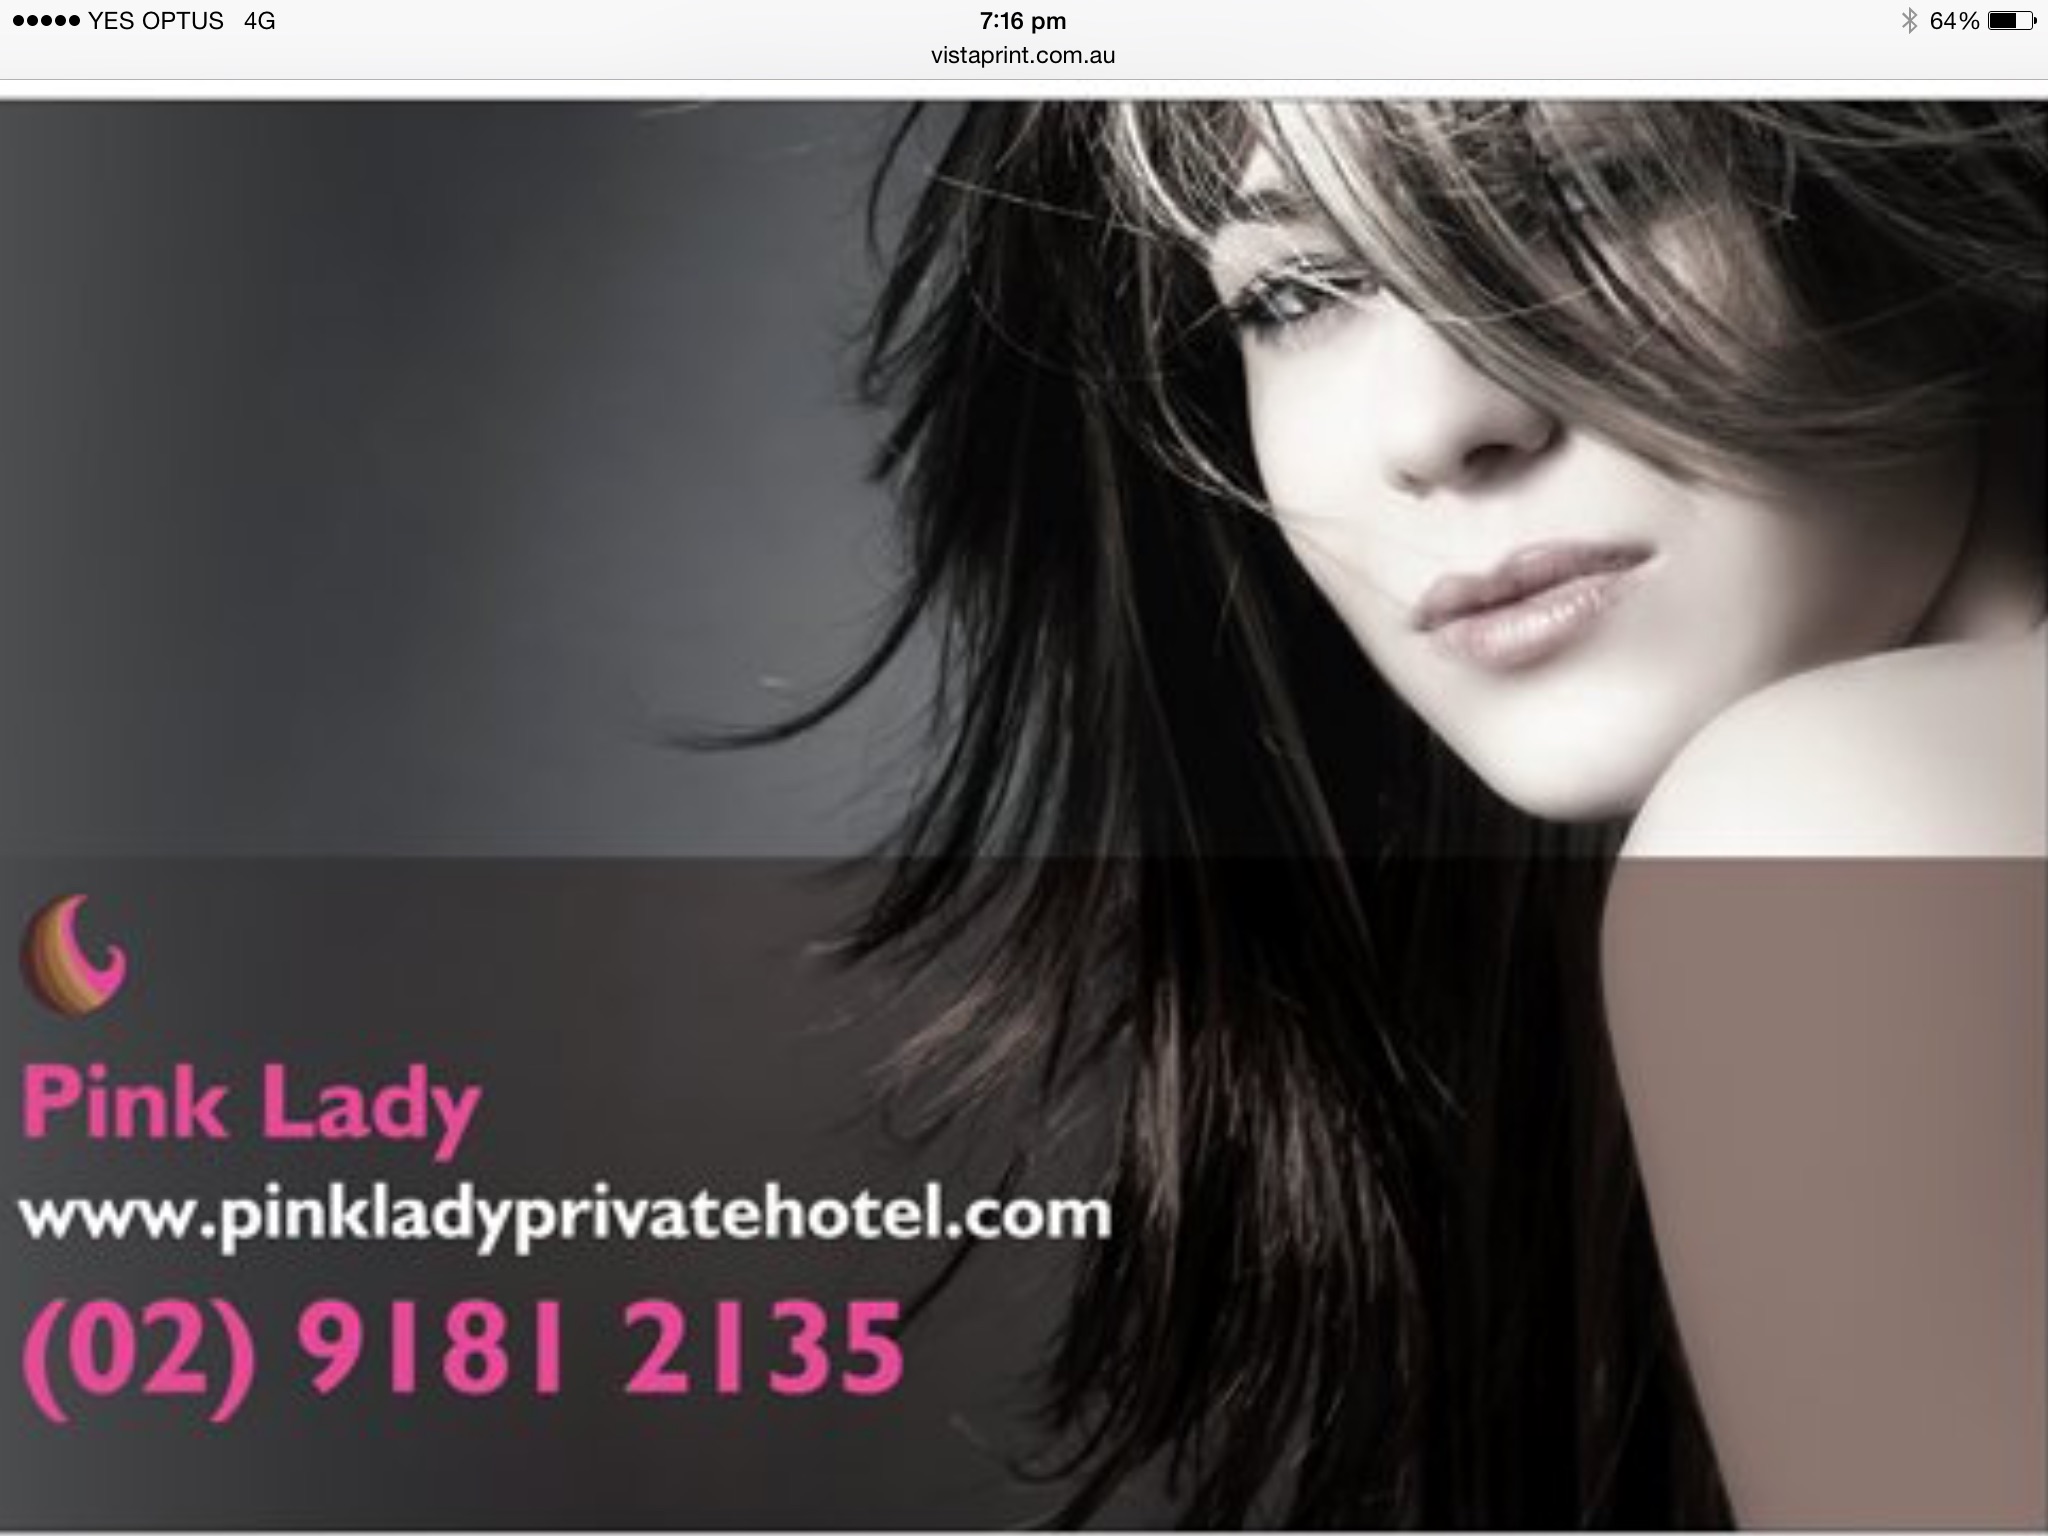 Pink Lady Private Hotel - Perisher Accommodation